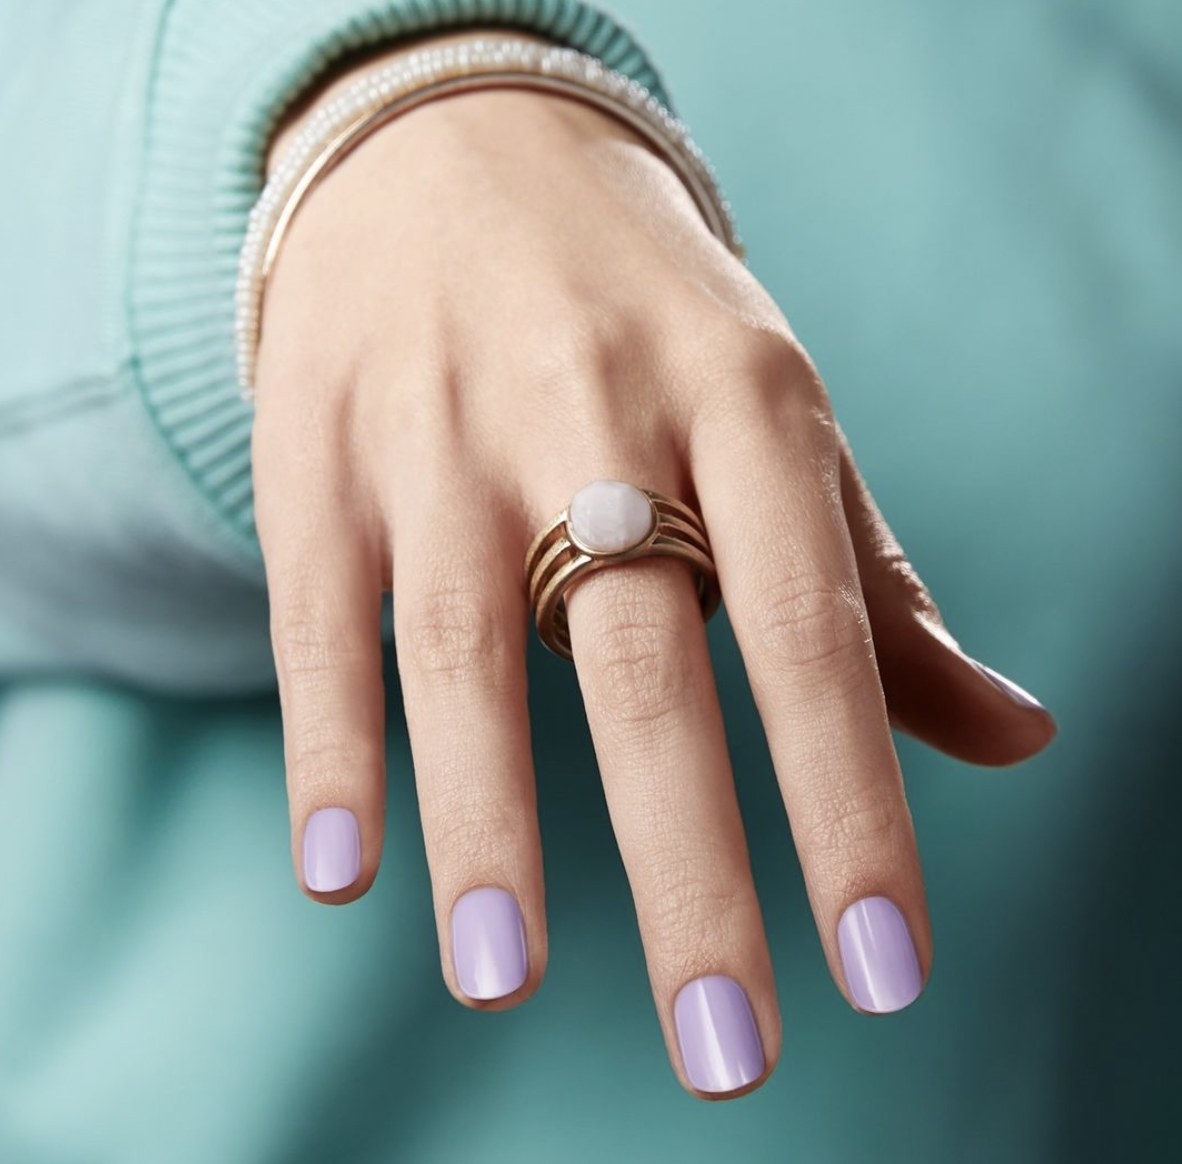 A hand with purple nail polish strips